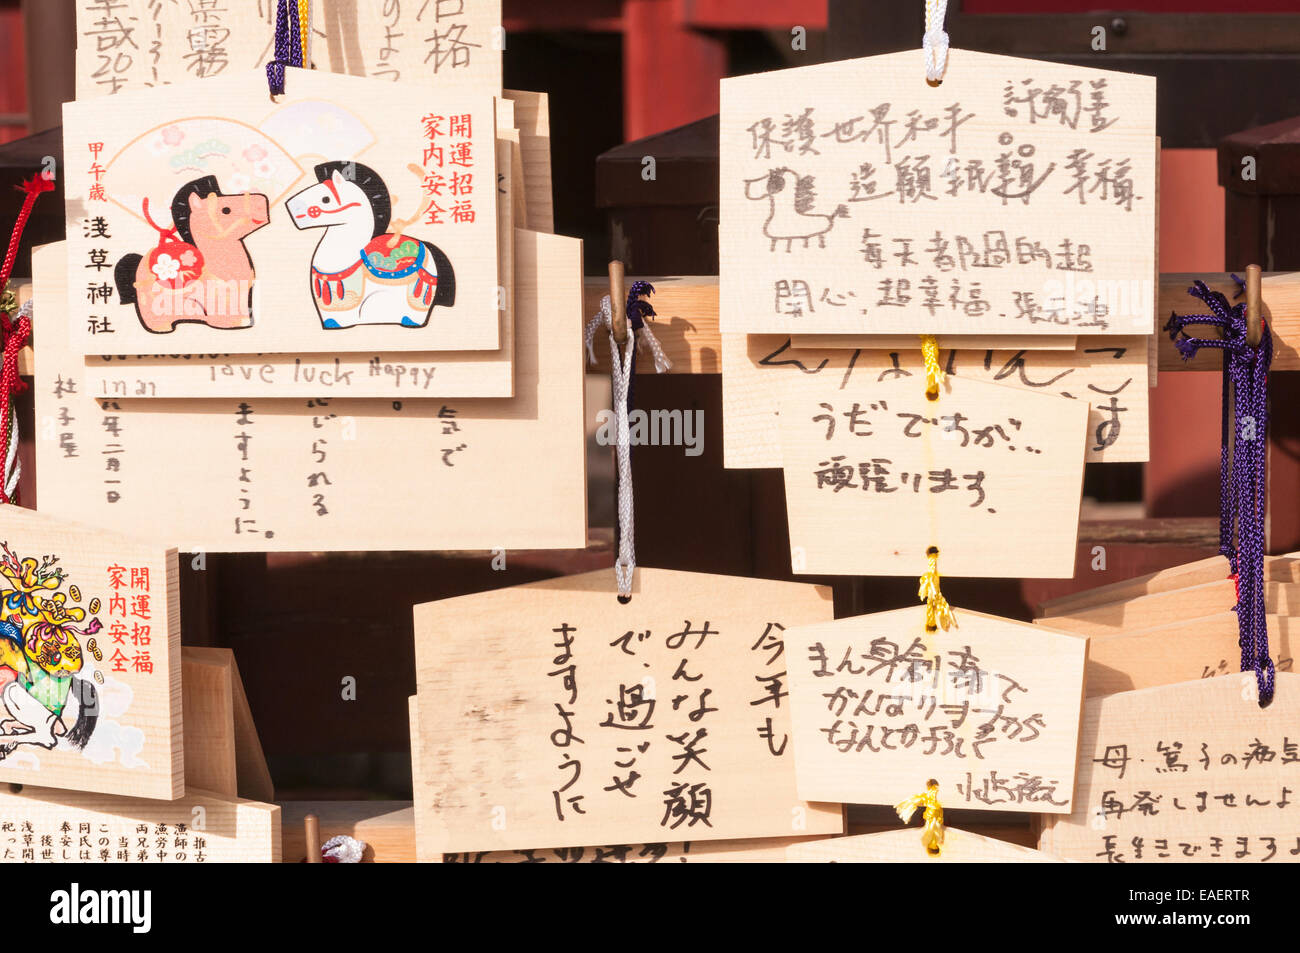 Japanese prayer plaques (boards), Ema, left by Shinto worshippers, Asakusa Shine, Shinto temple, Senso-ji, Asakusa, Tokyo, Japan Stock Photo